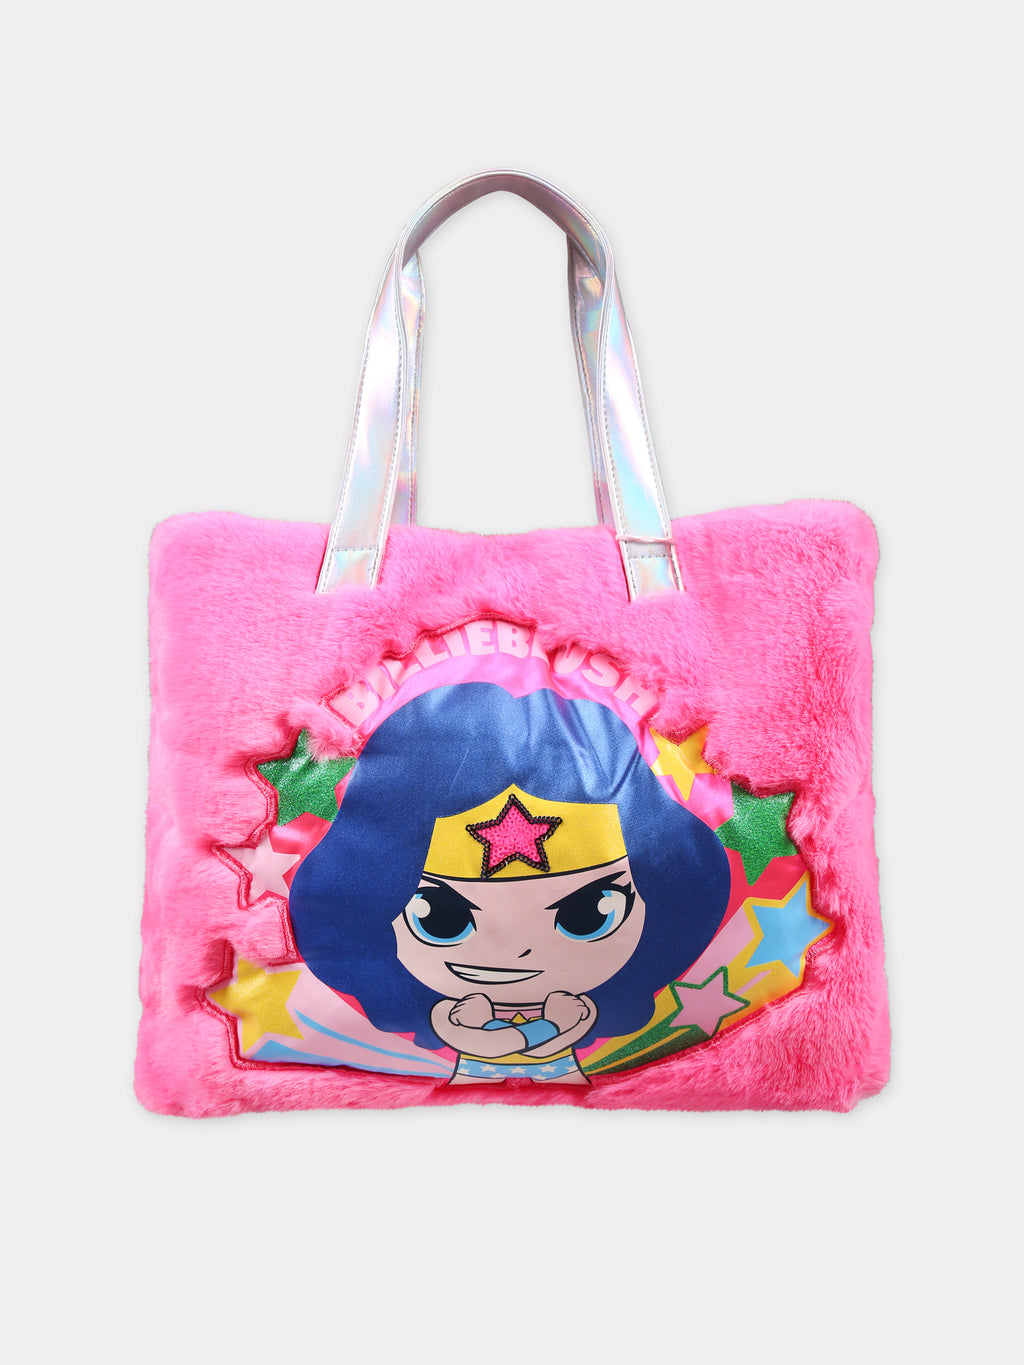 Fuchsia bag for girl with Wonder Woman